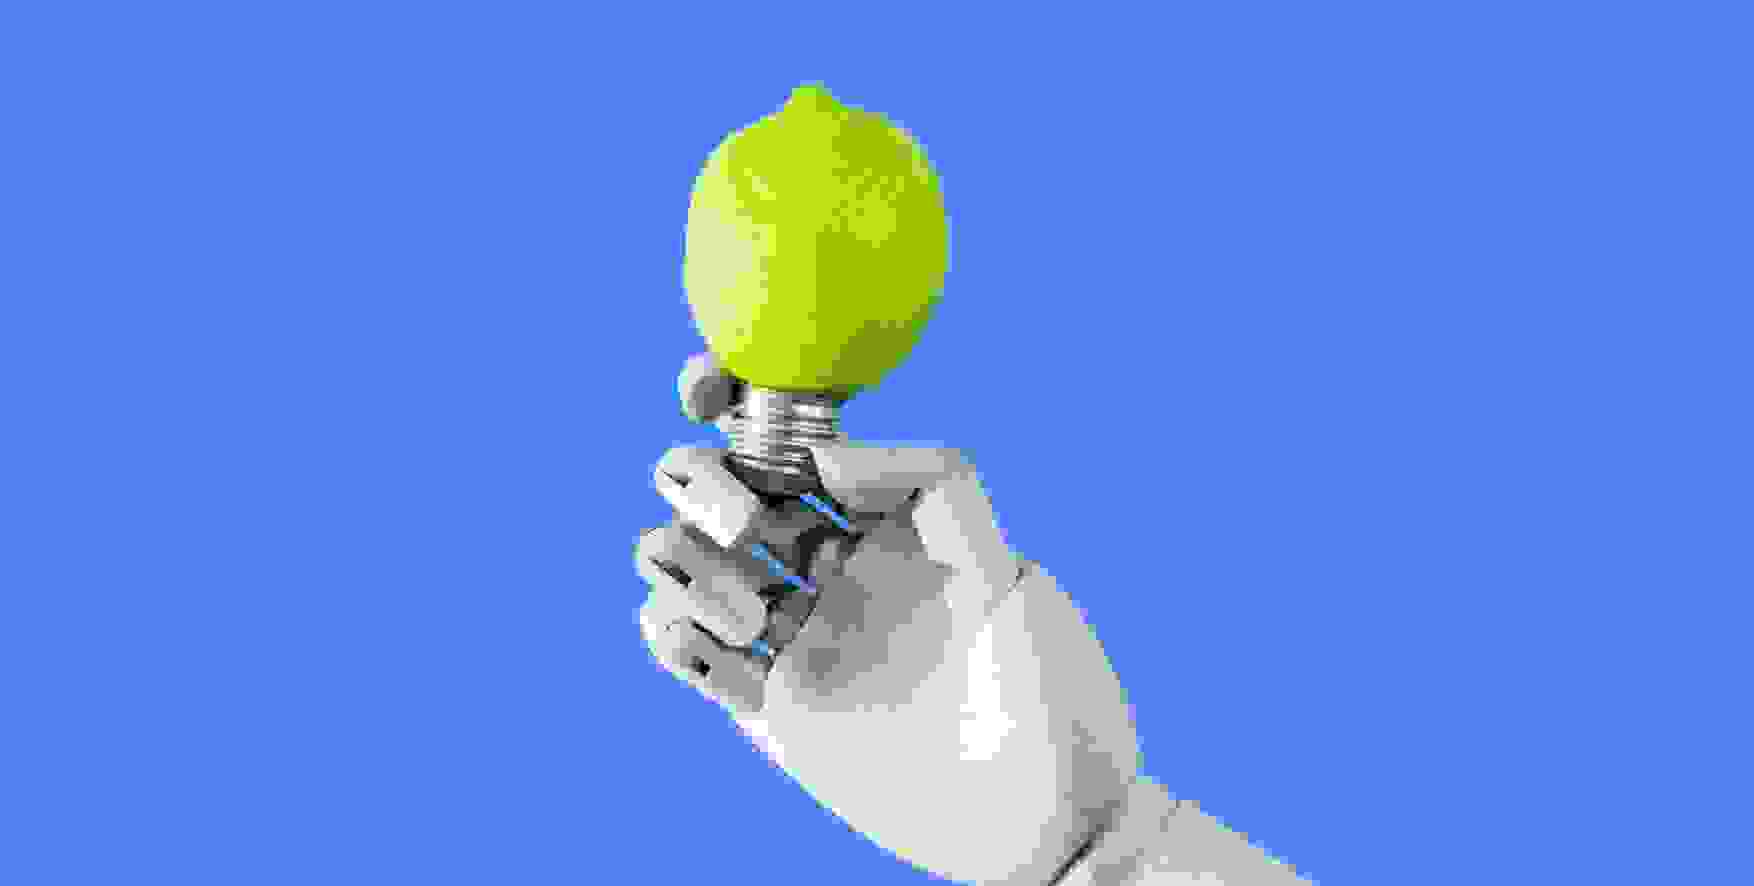 a robot hand holding a light bulb in the shape of a lemon